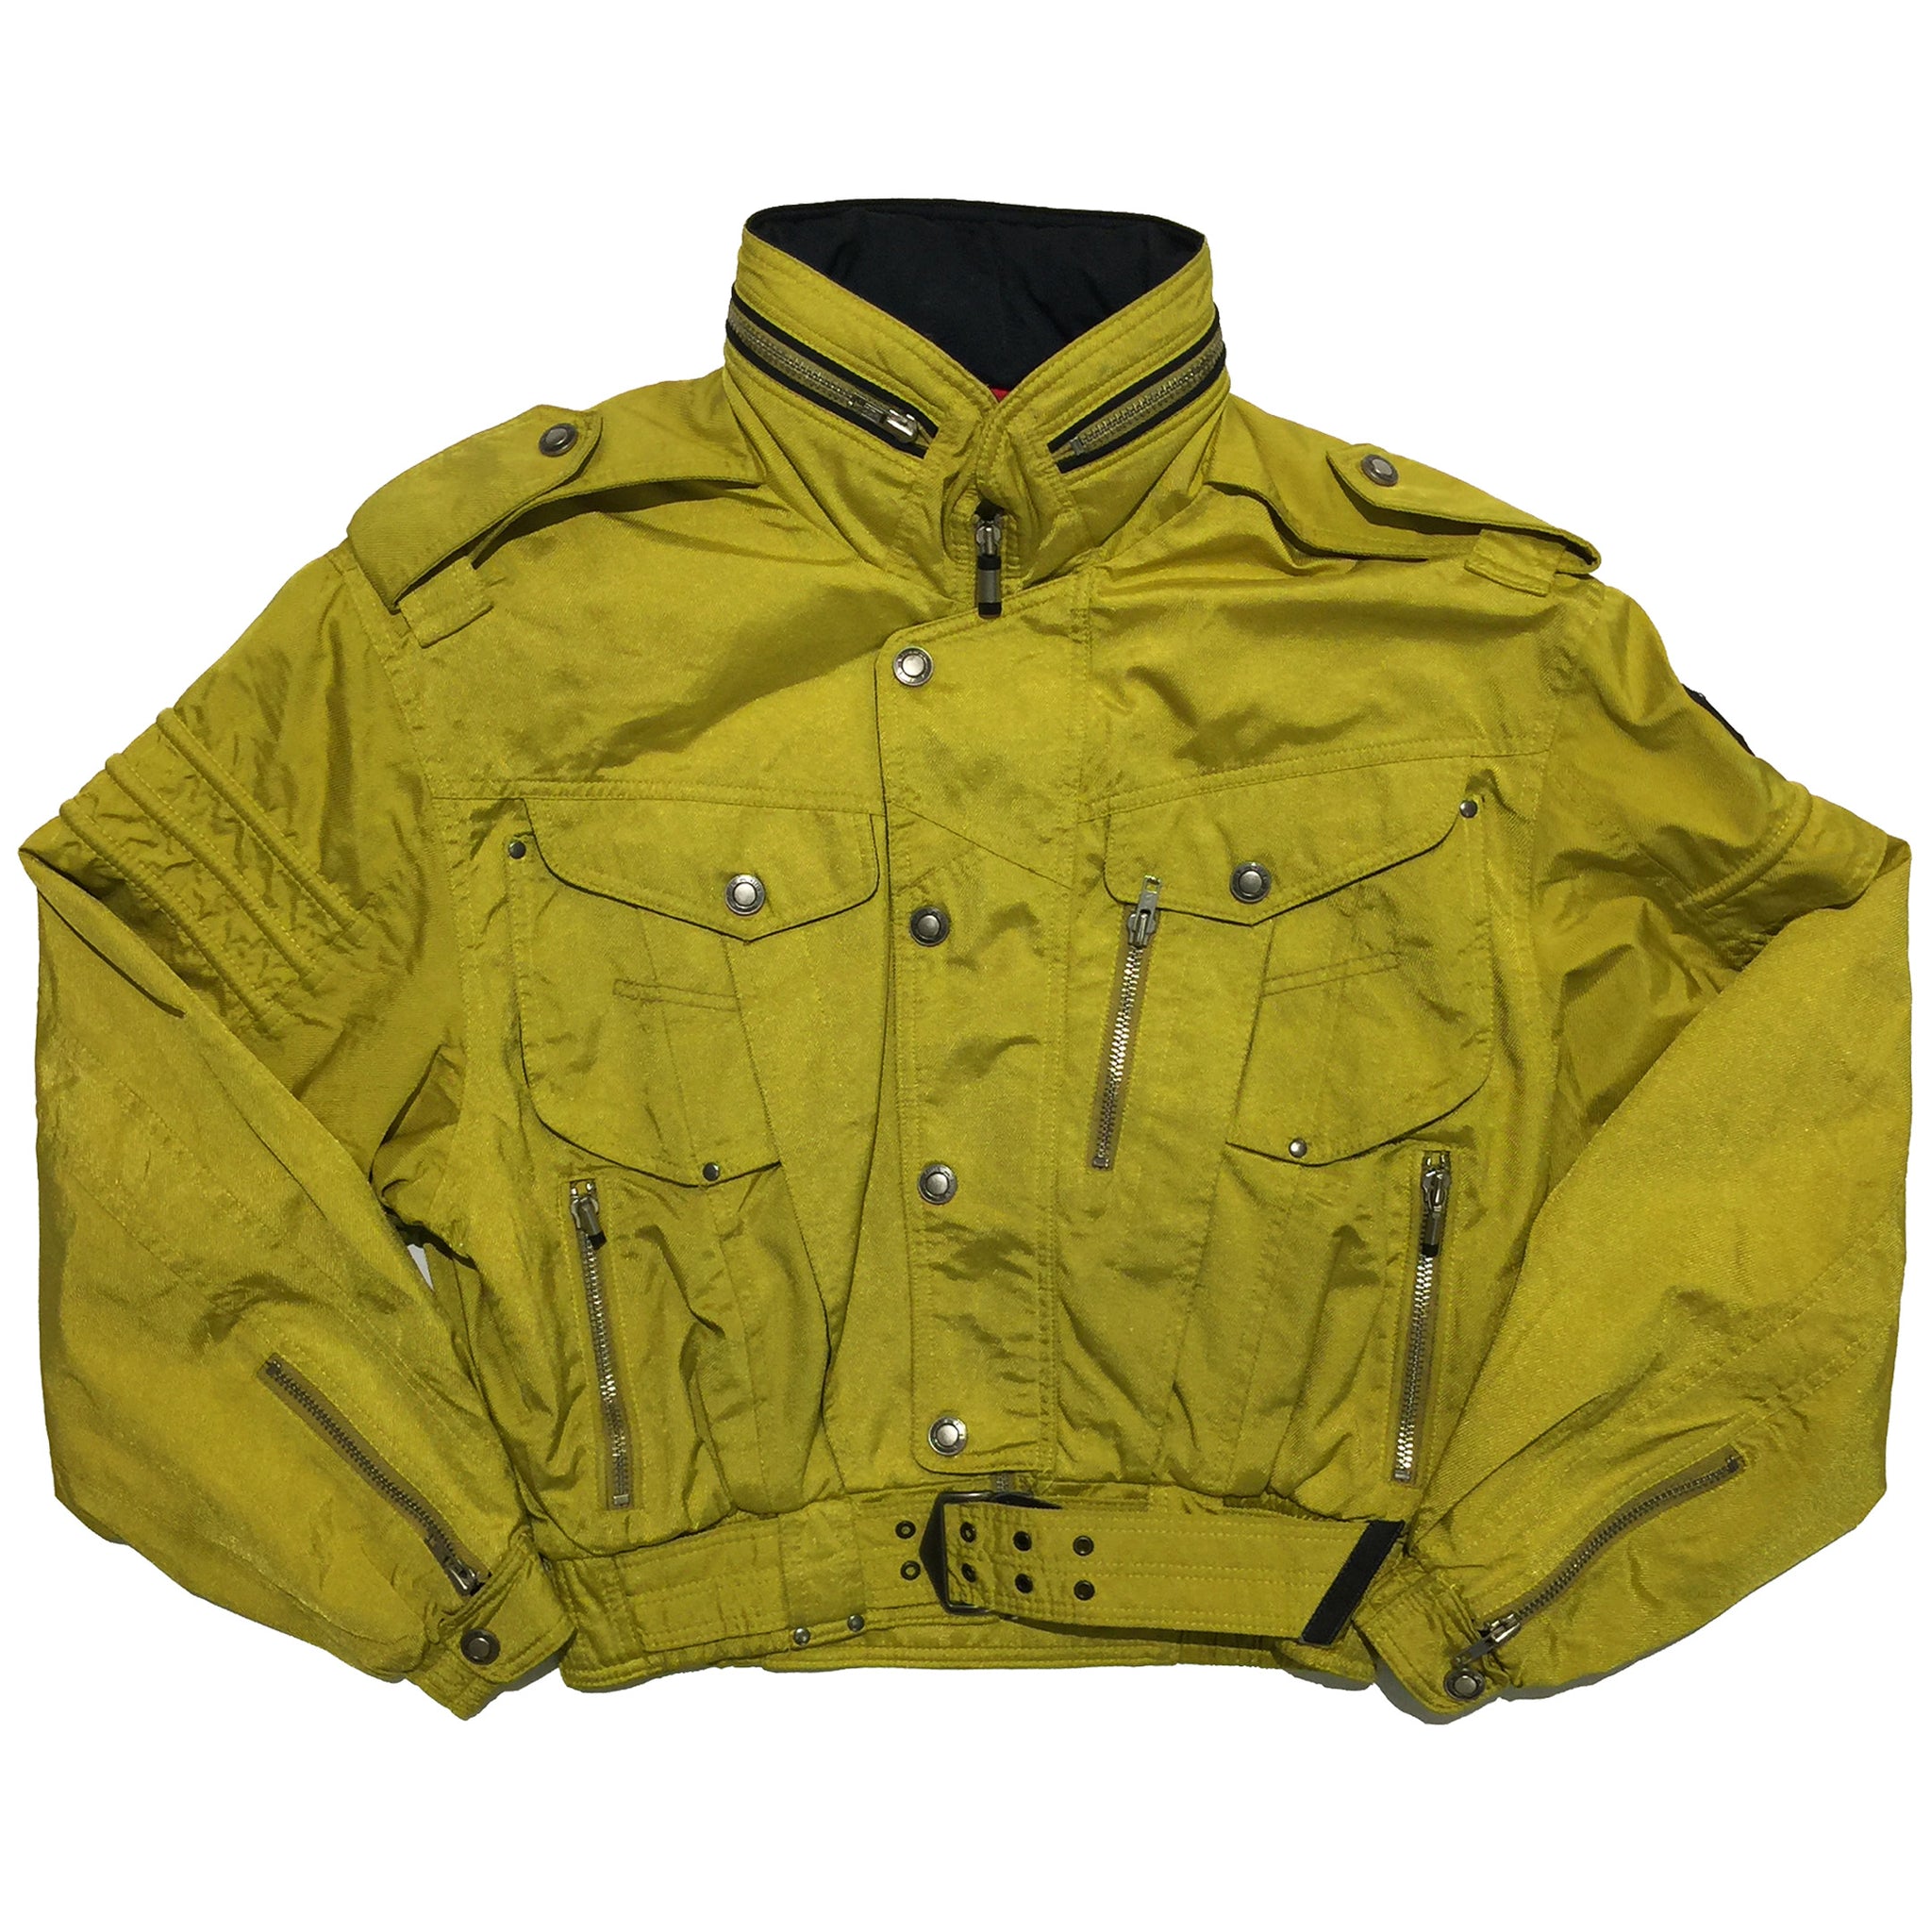 Killy Mustard Rider Style Jacket